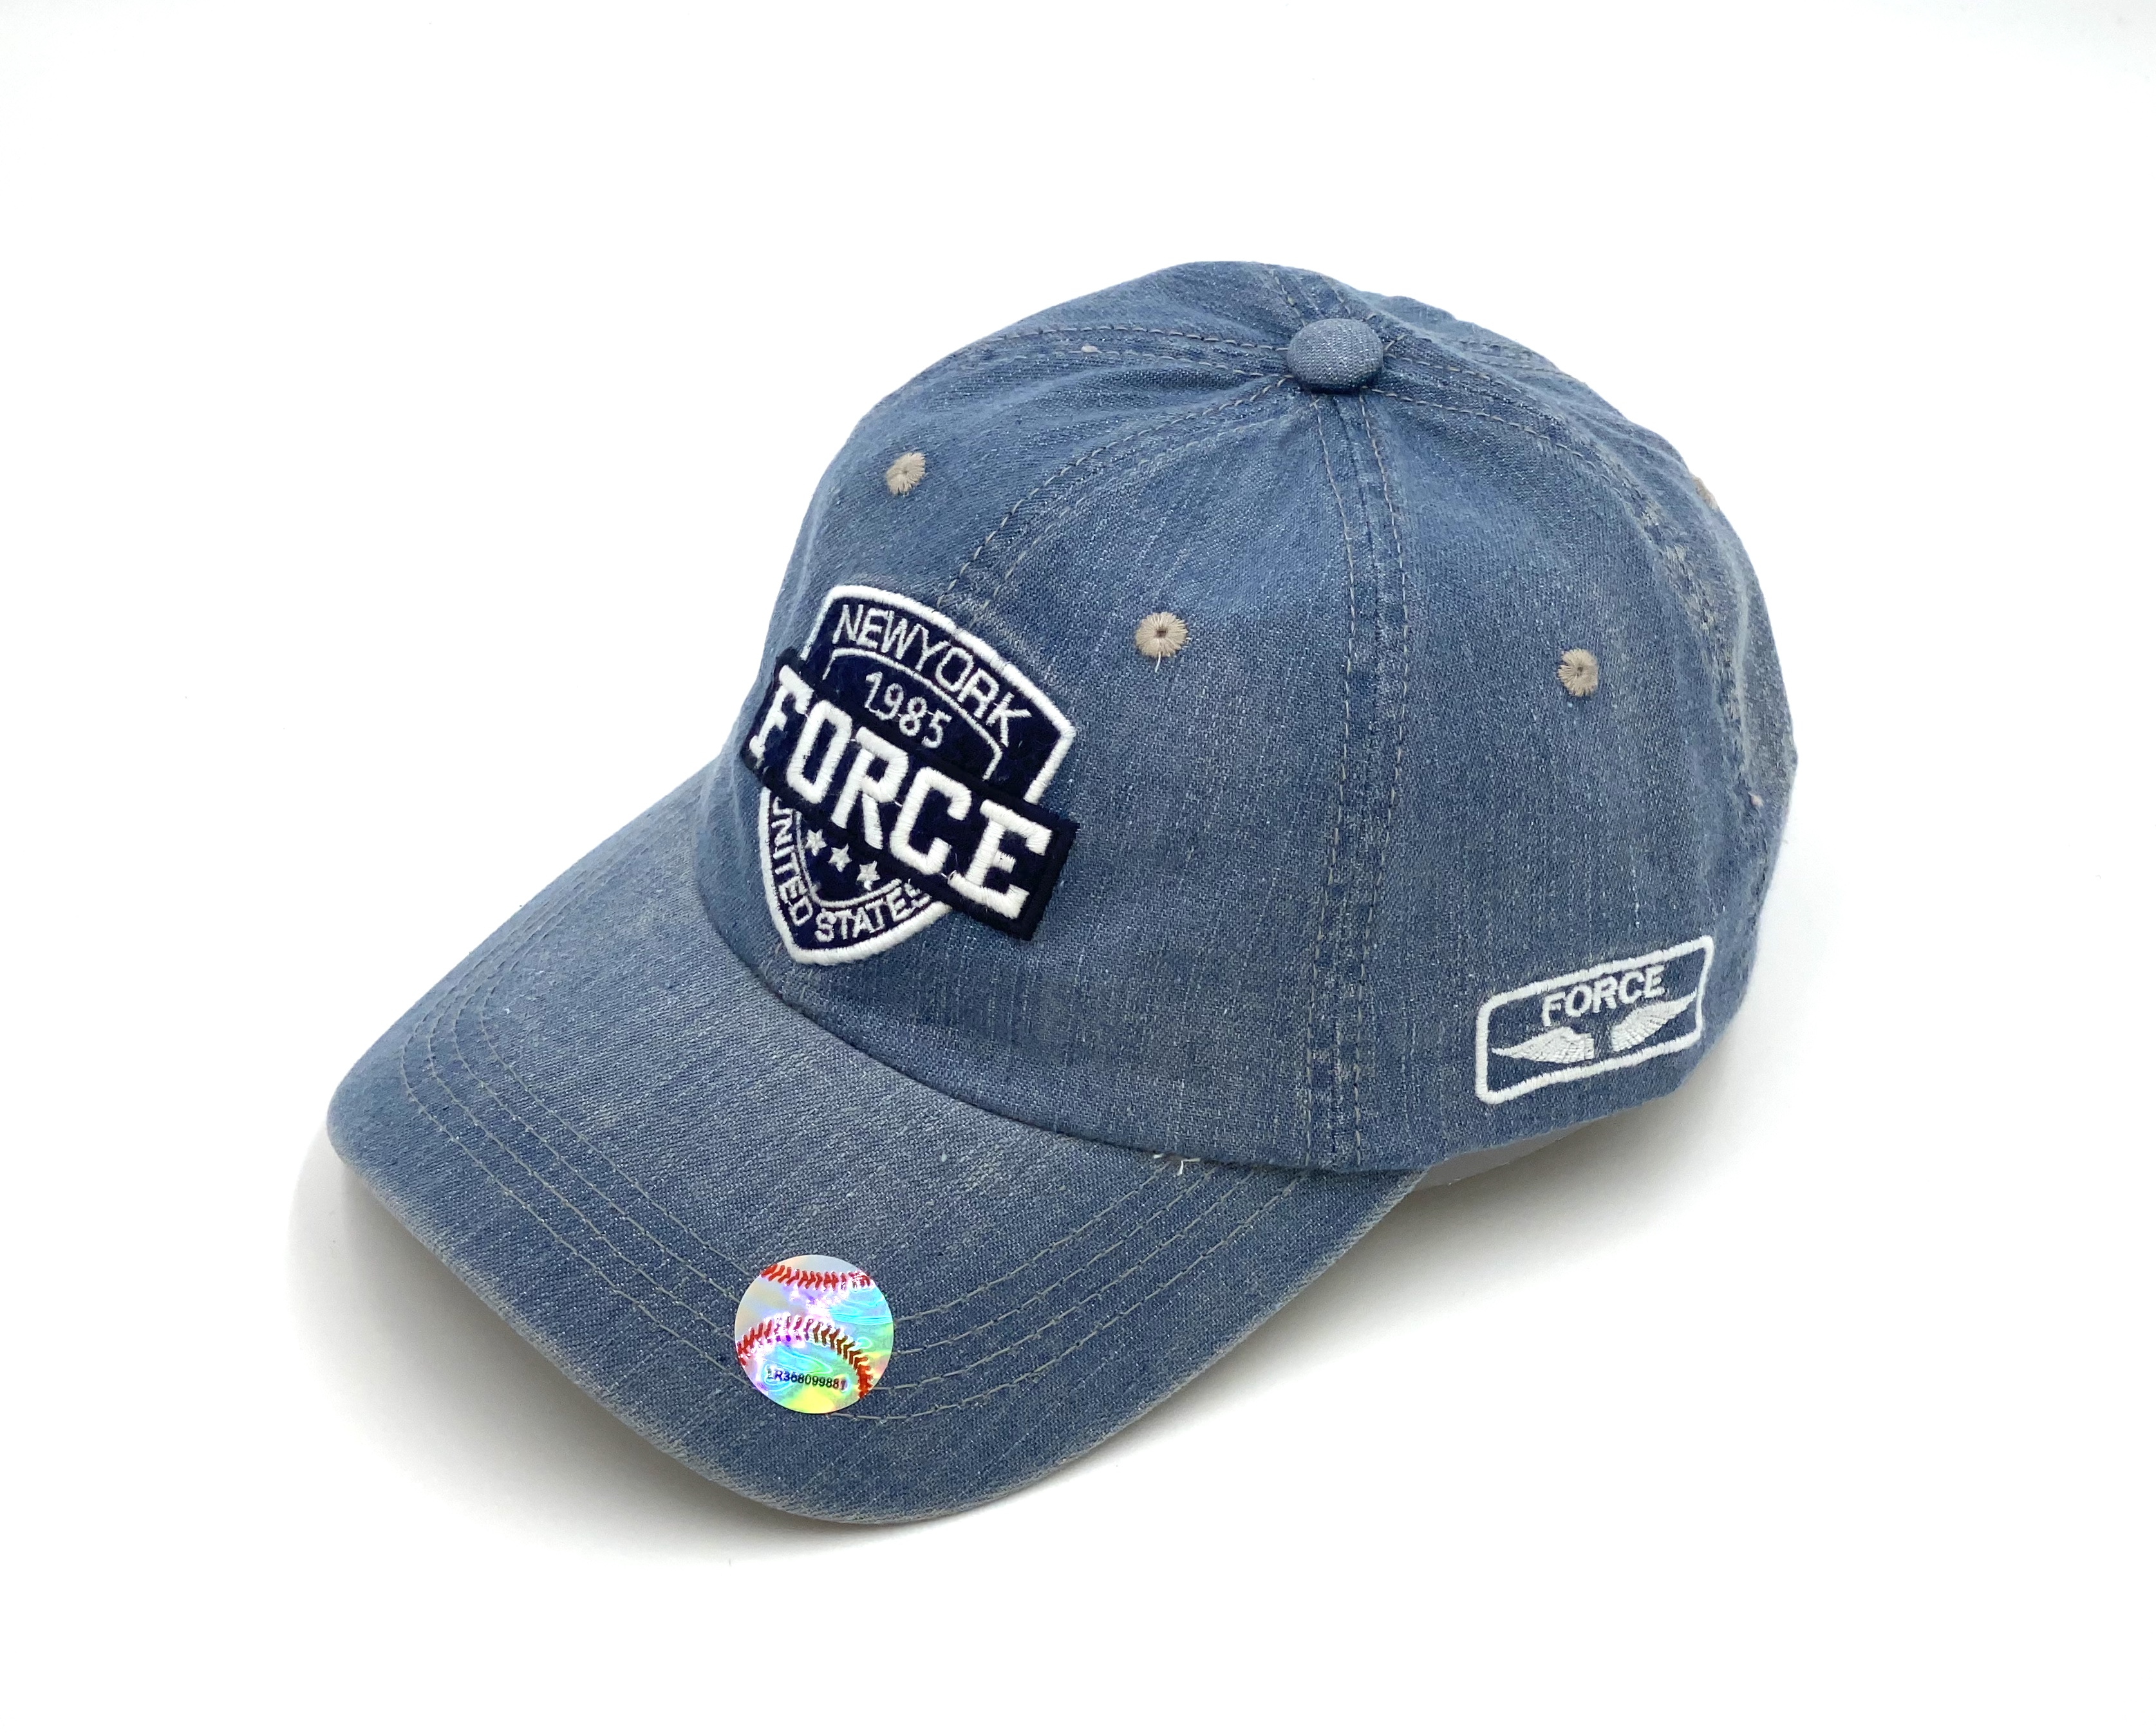 New York Force Cap